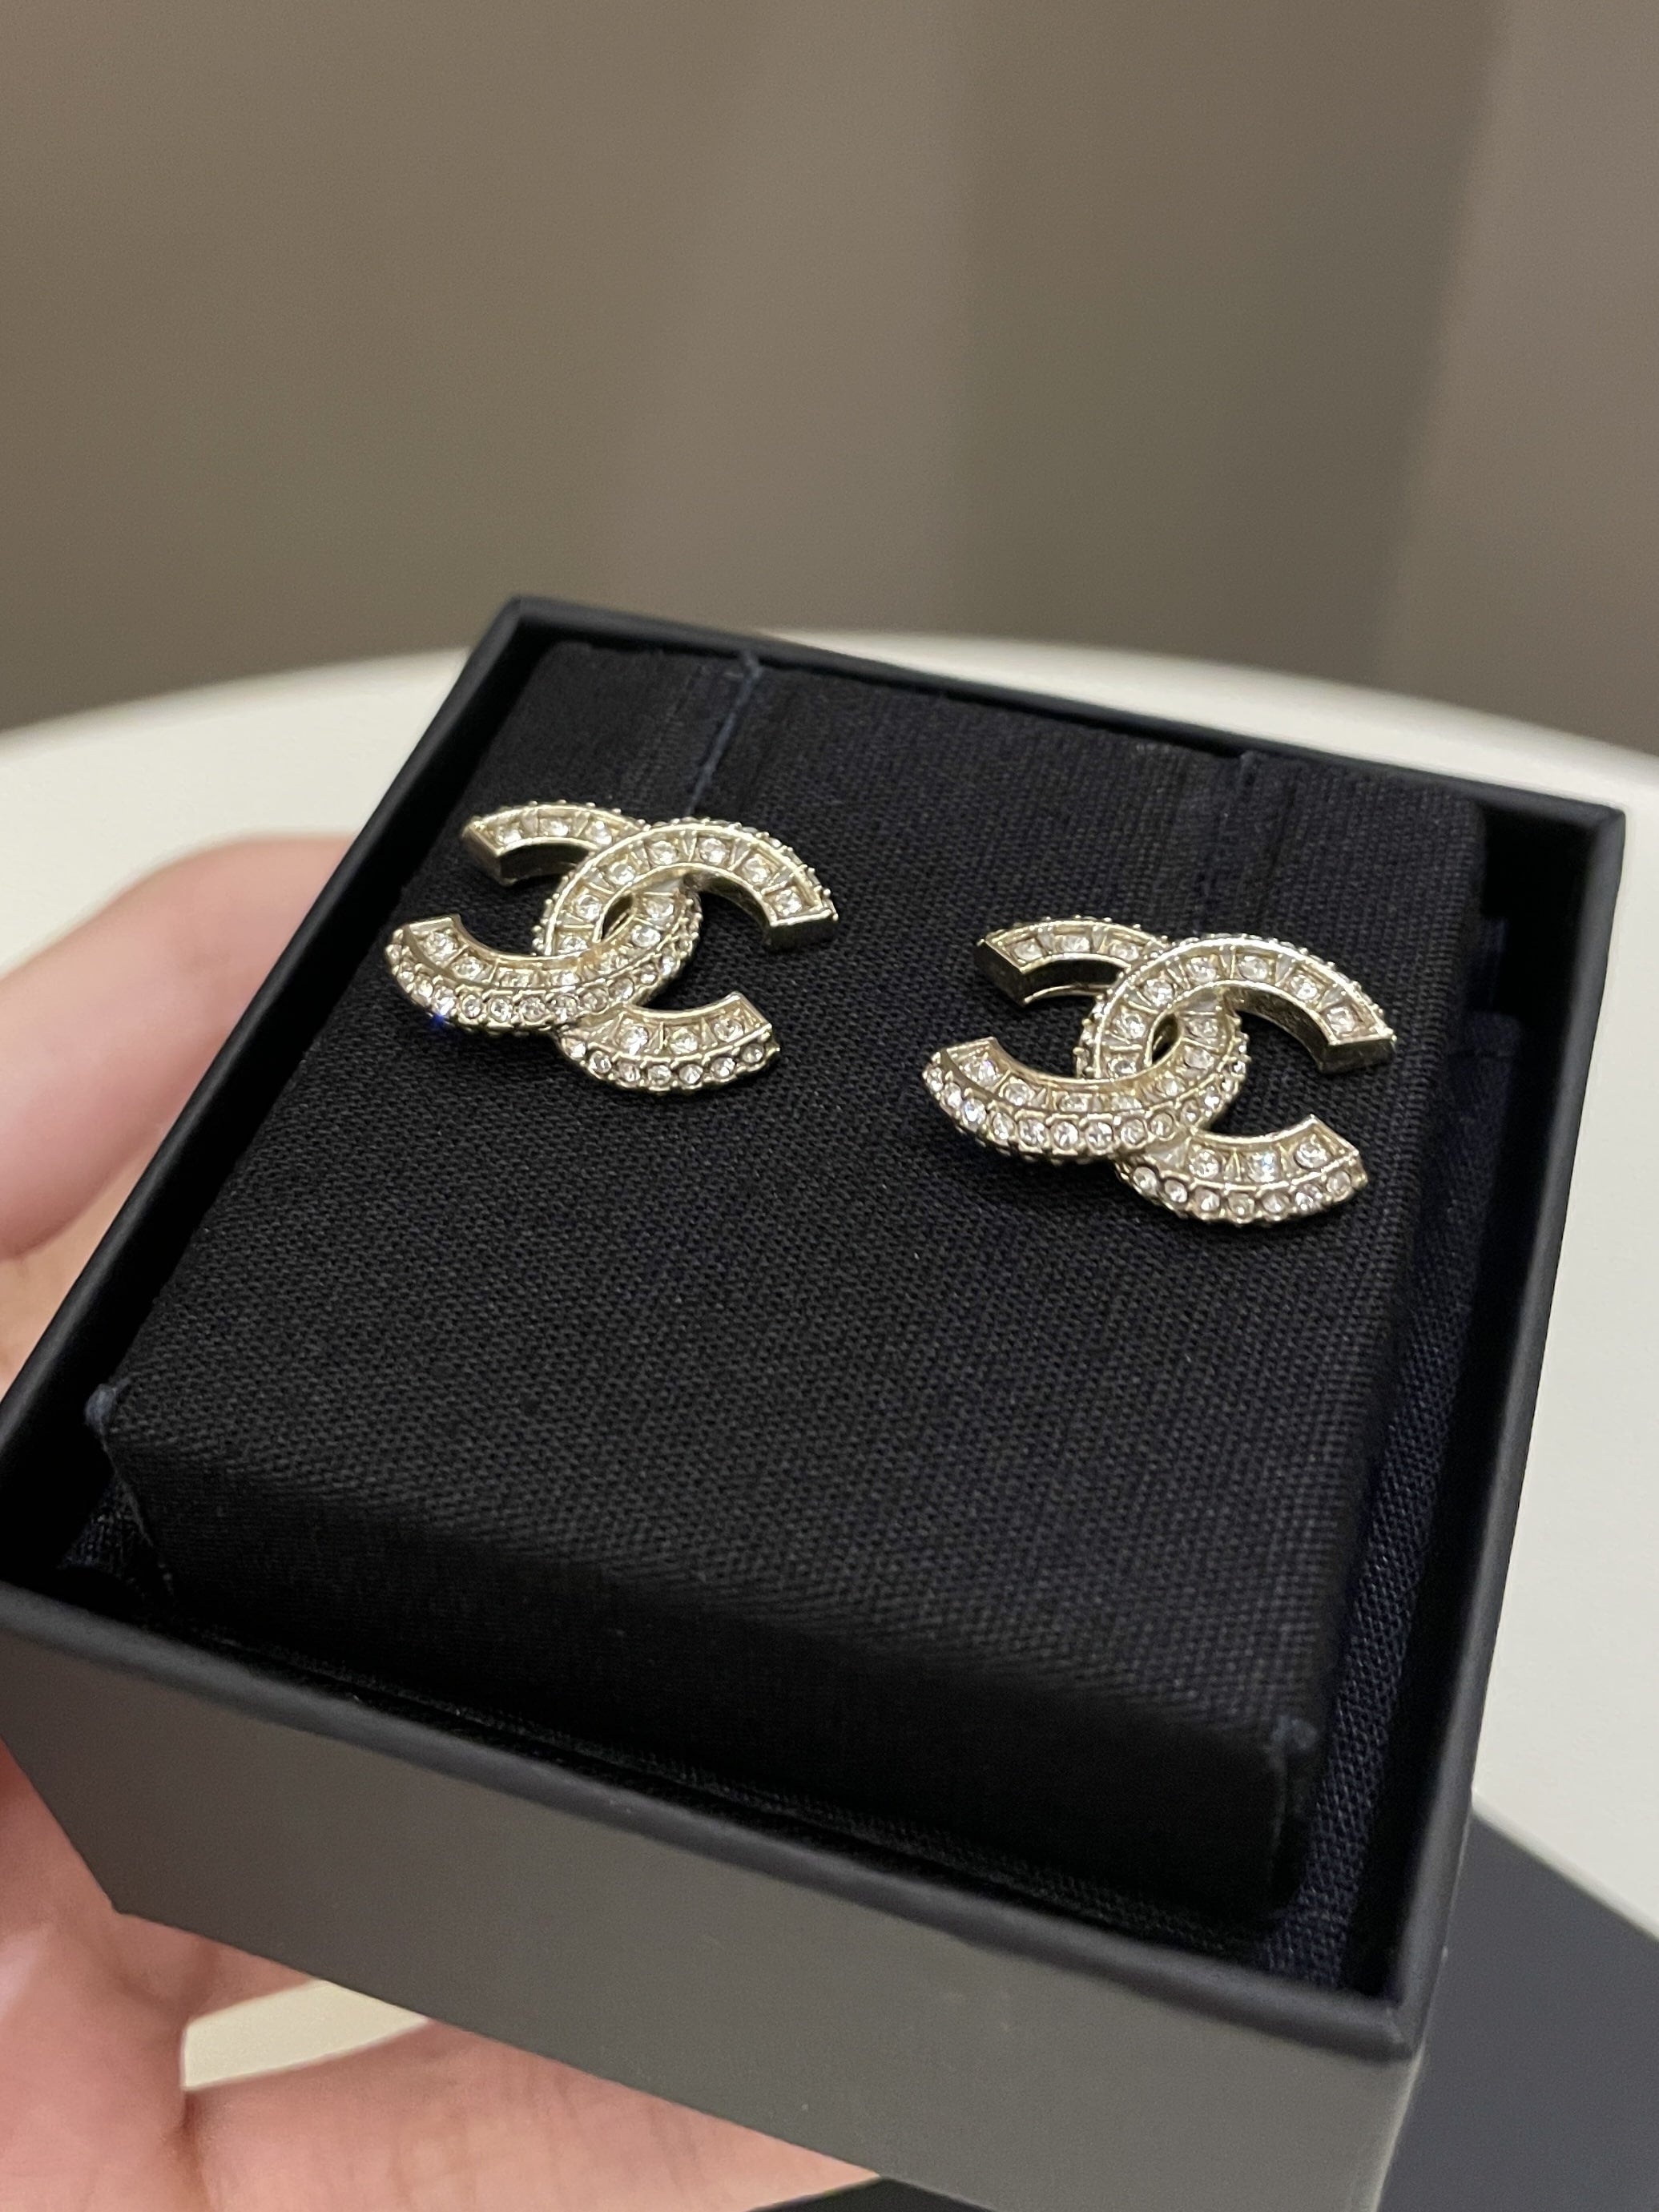 Chanel 22V Classic Cc Earring 
Rhinestones